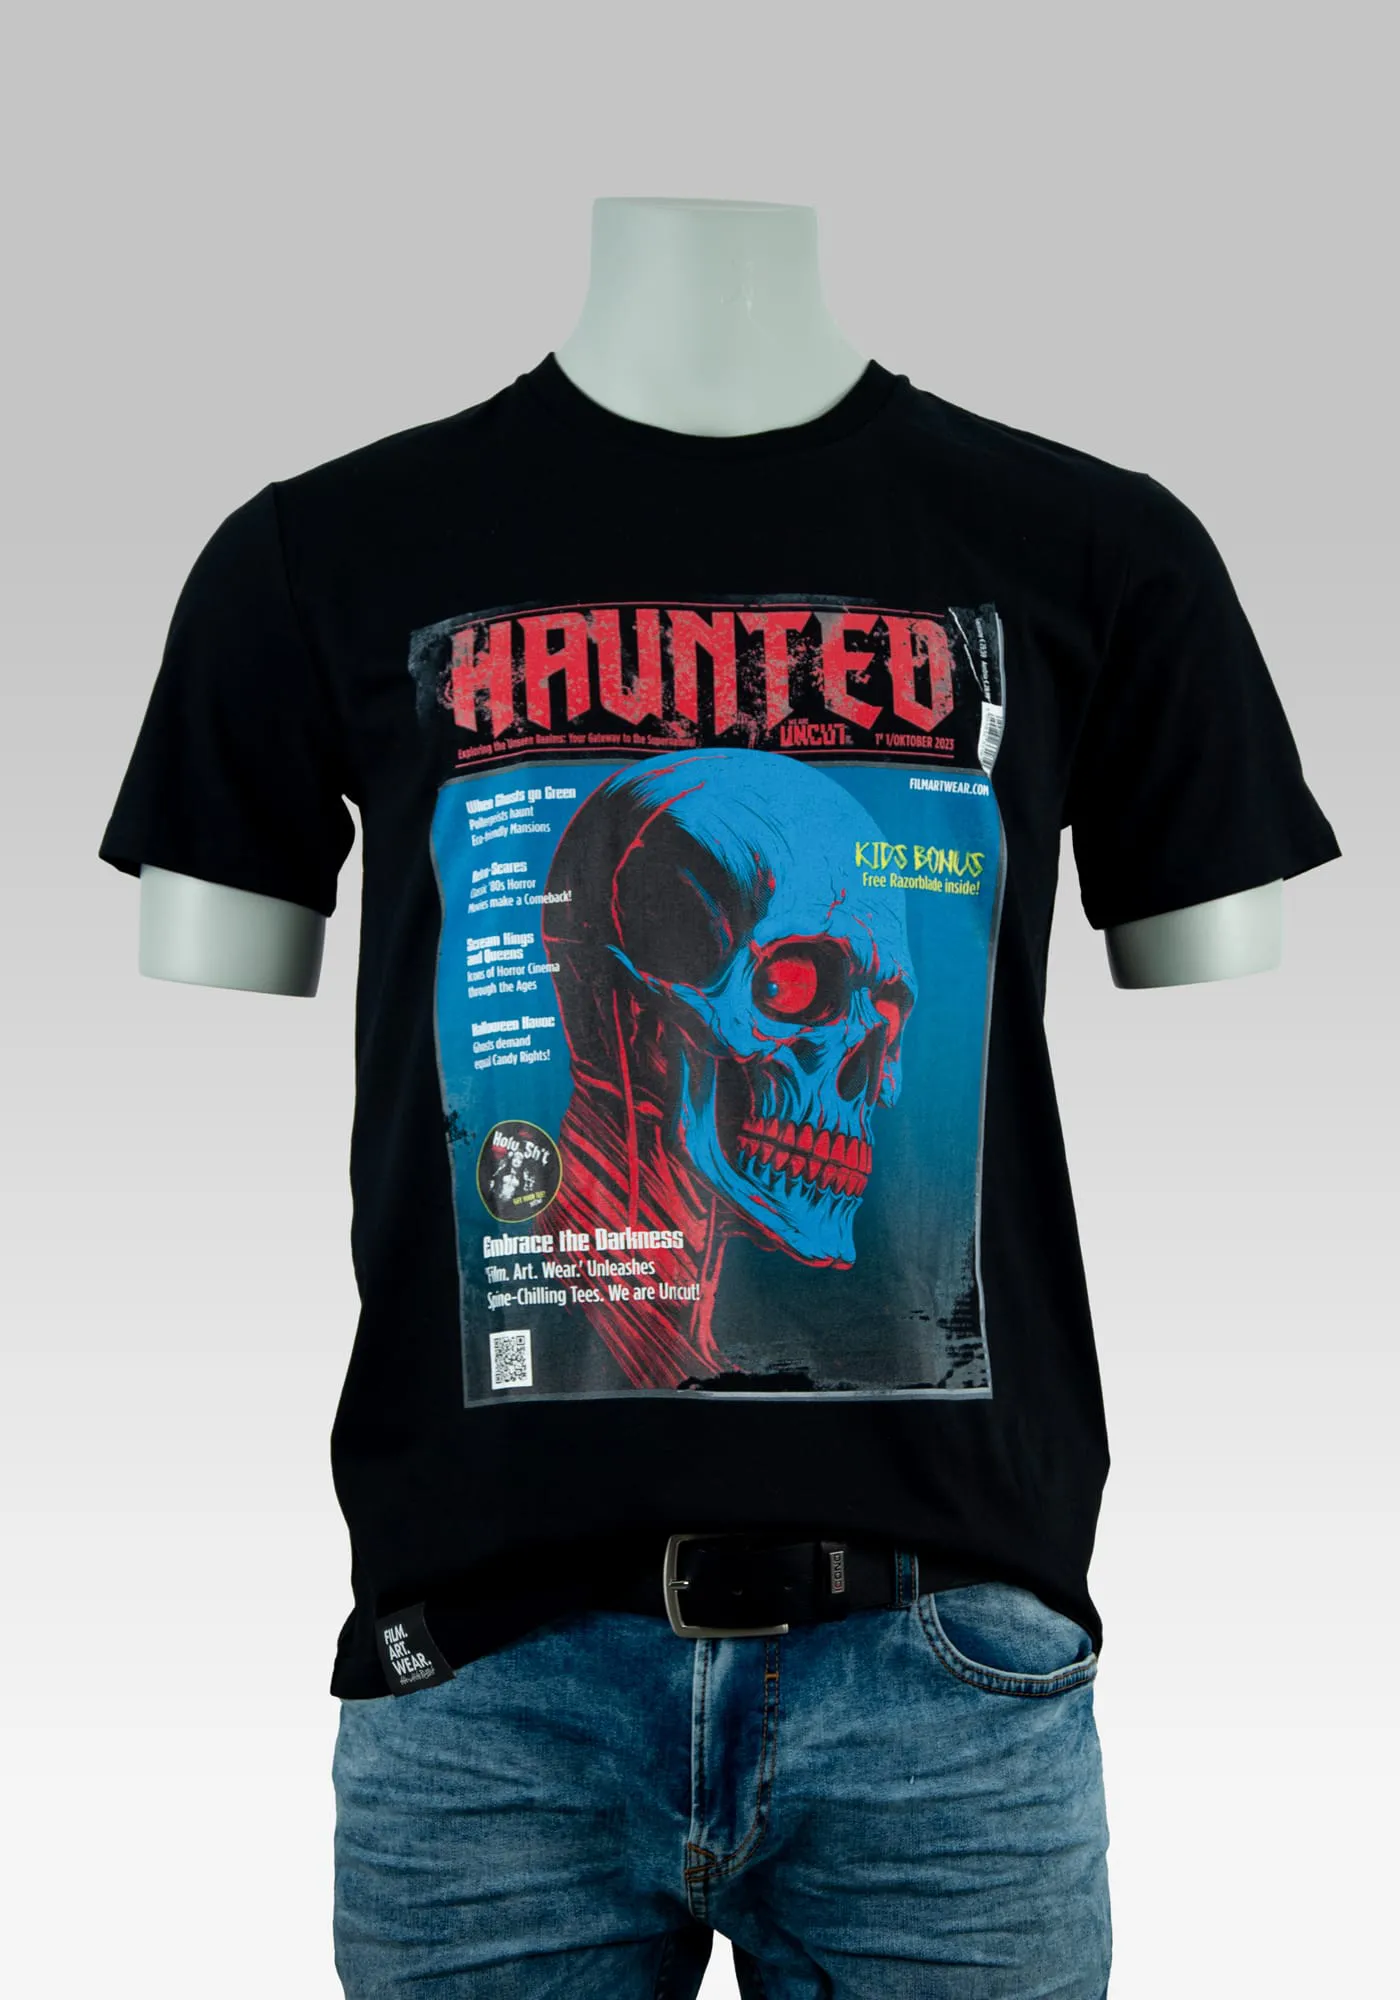 Totenkopf t-shirt kaufen Magazin Cover Print auf schwarzem T-Shirt